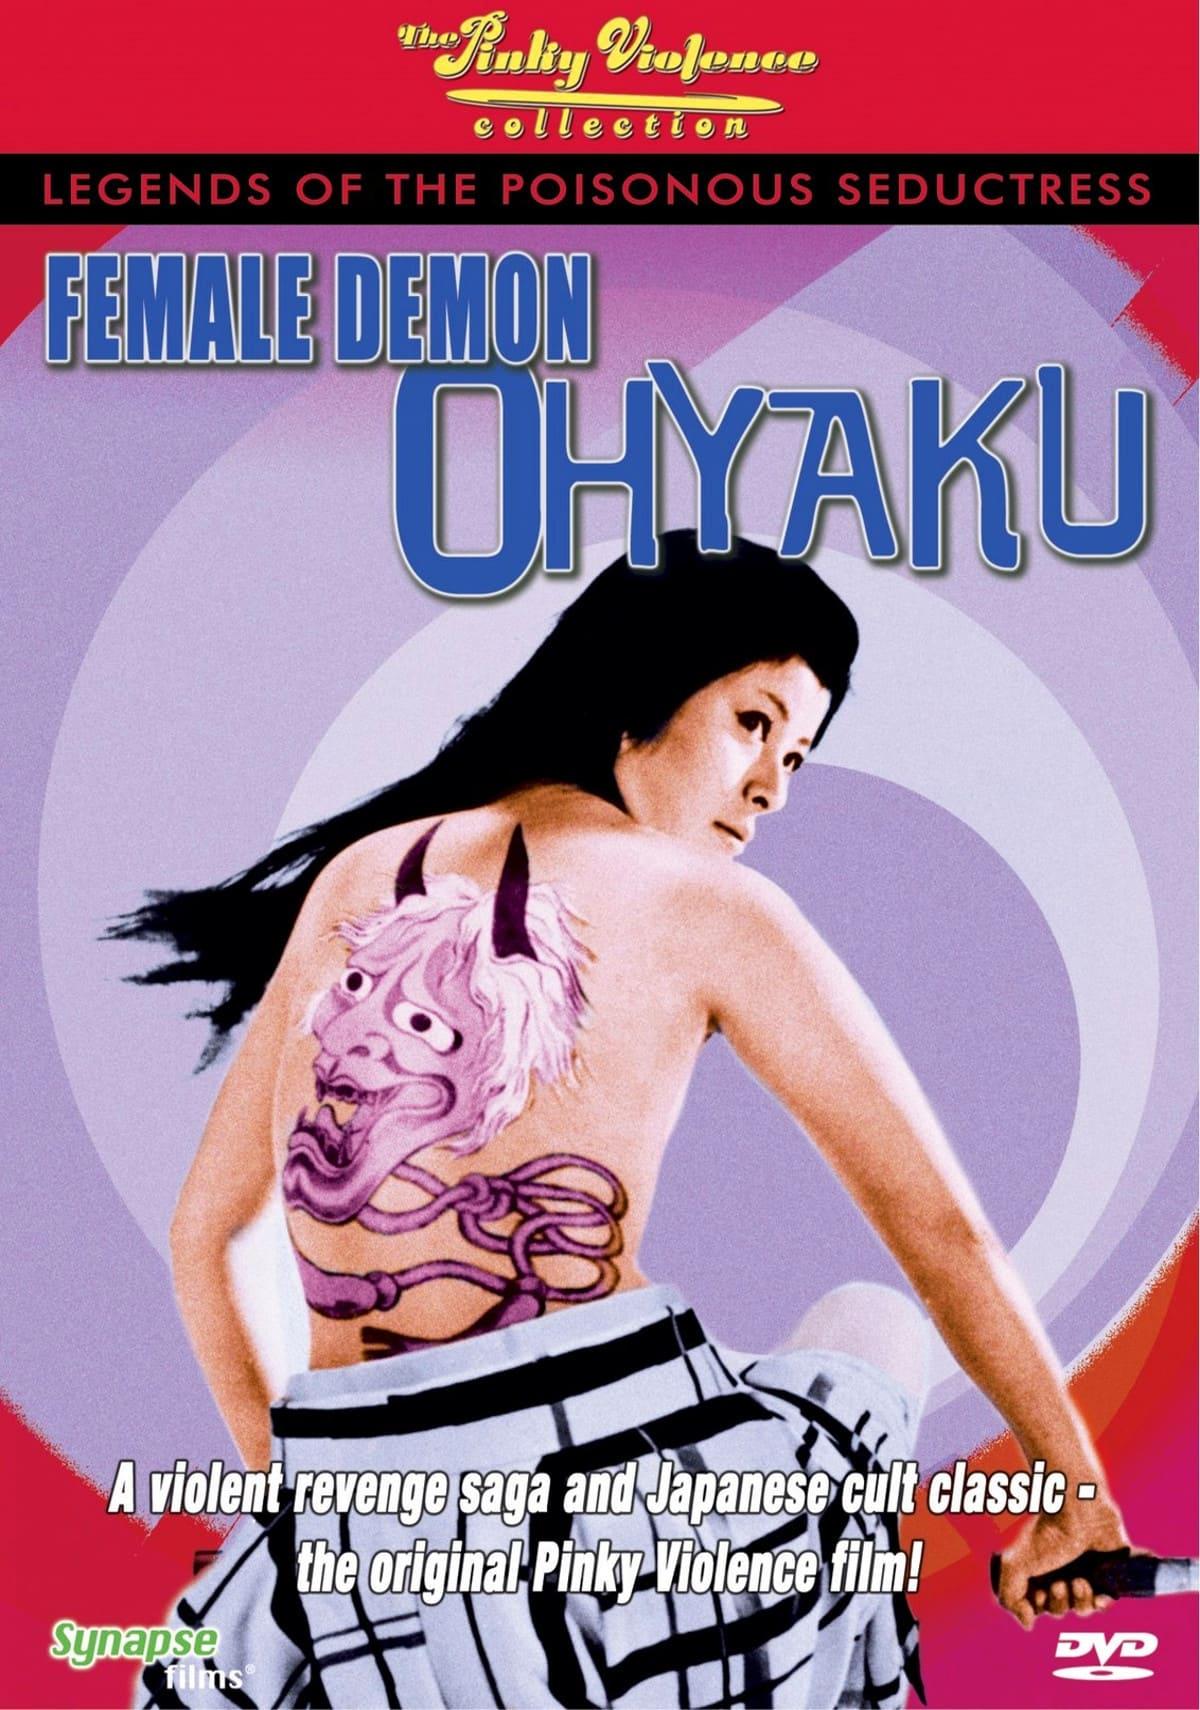 Ohyaku: The Female Demon poster